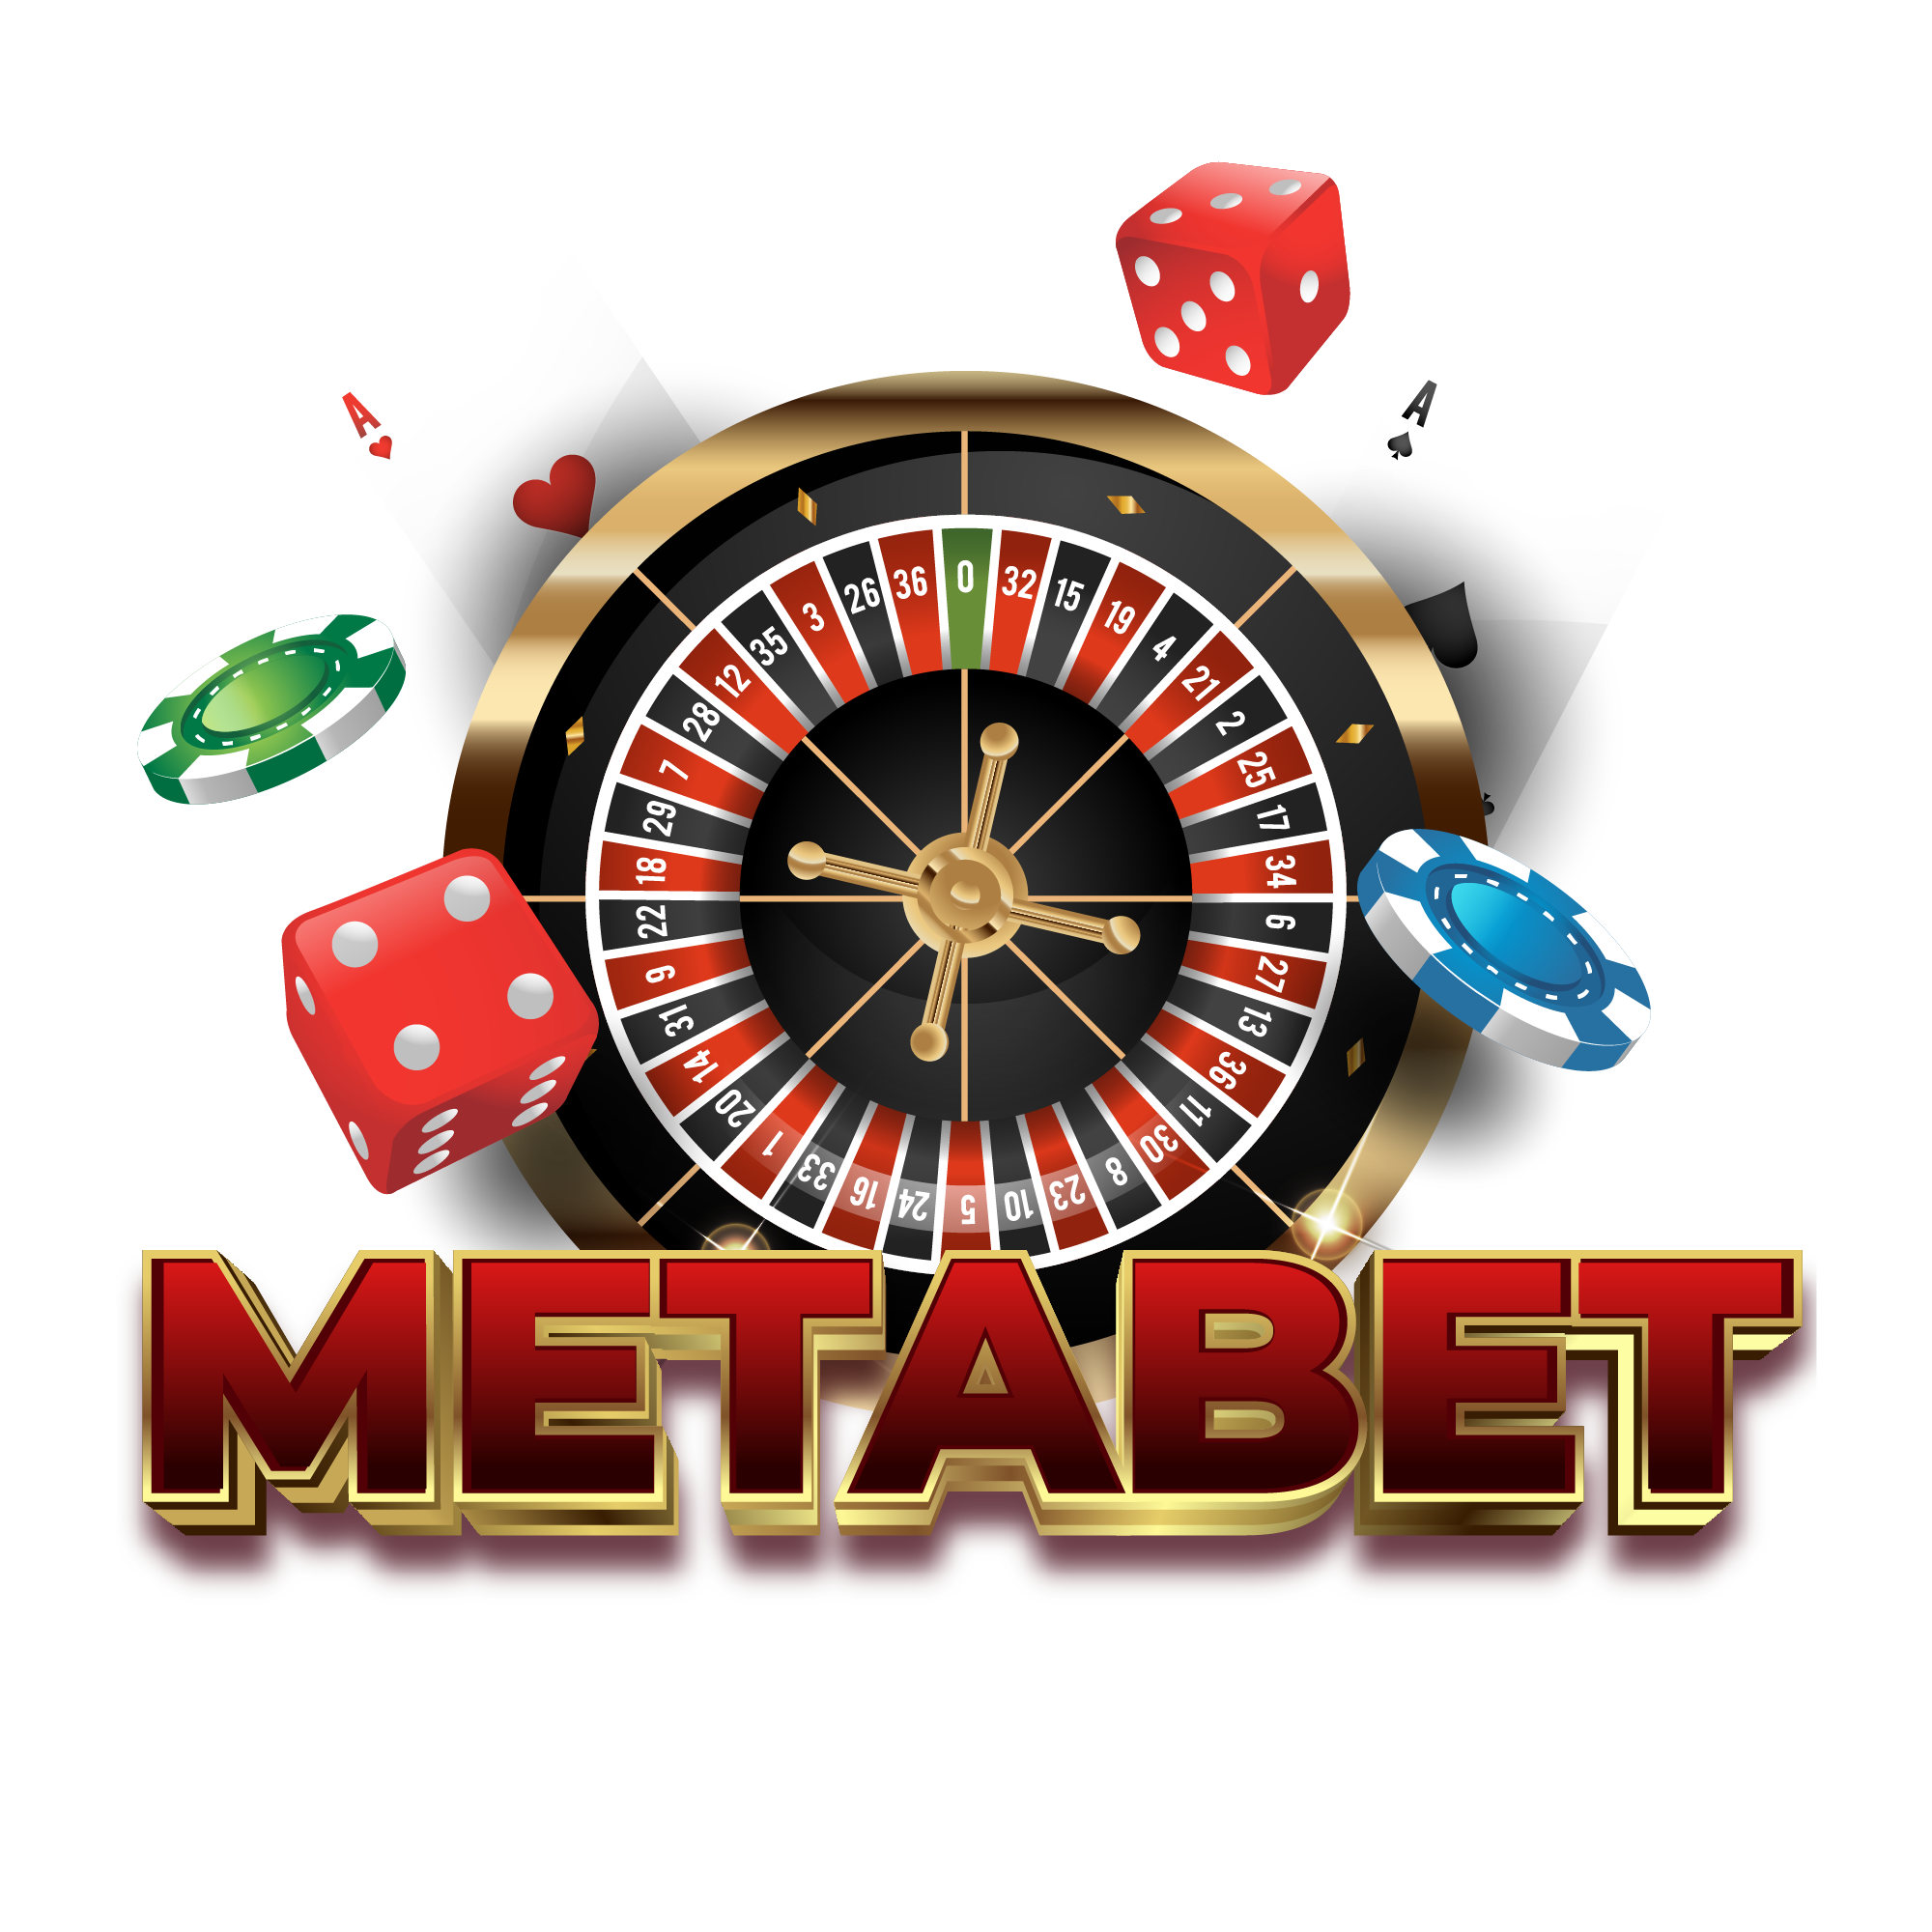 MetaBET Review - Is MetaBET Legit or Scam